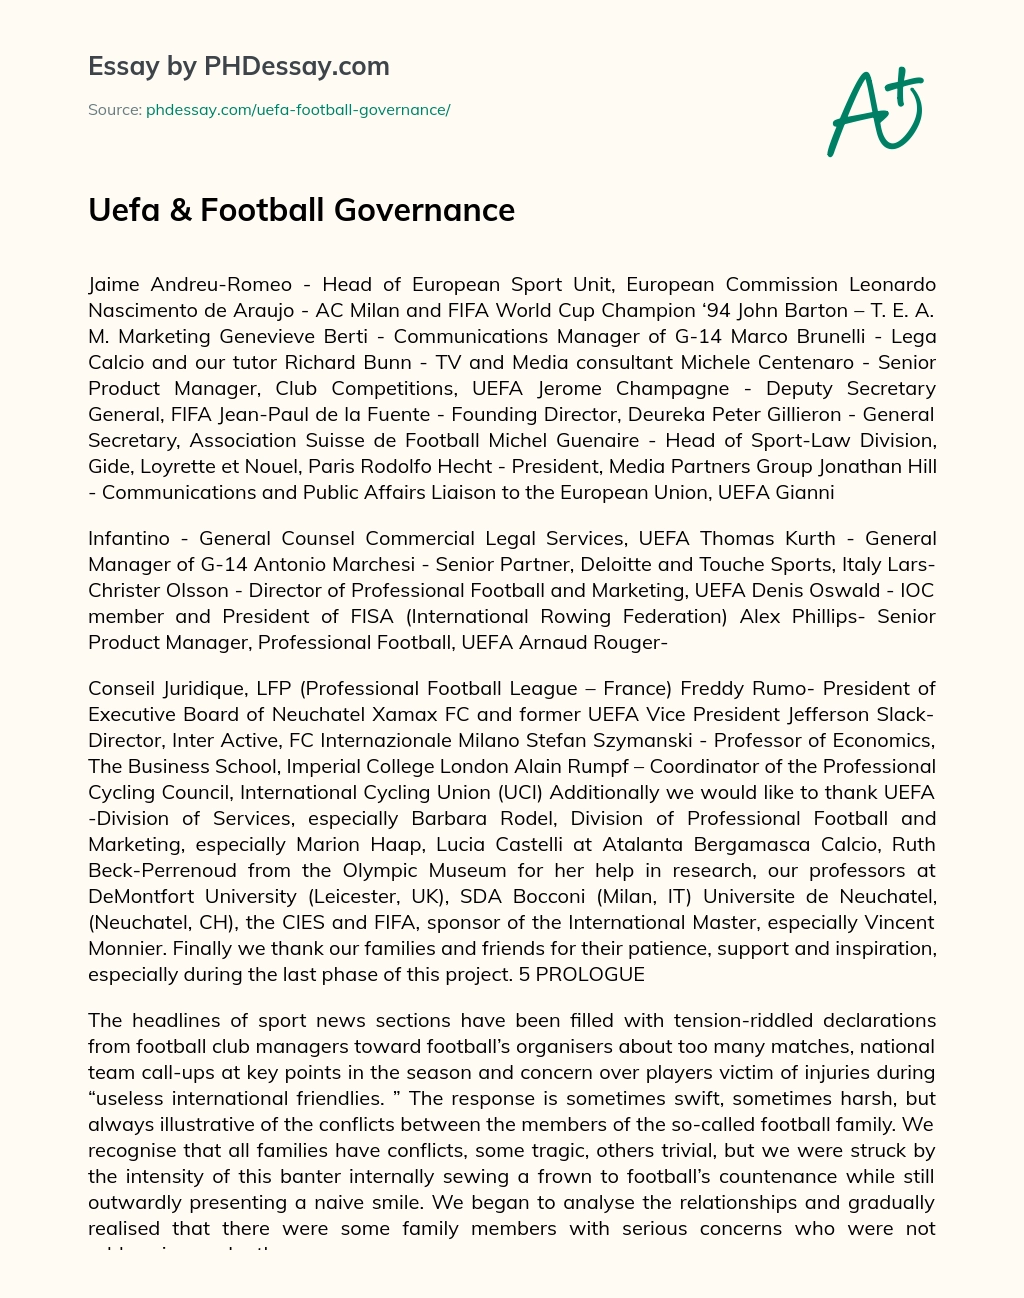 Uefa & Football Governance essay